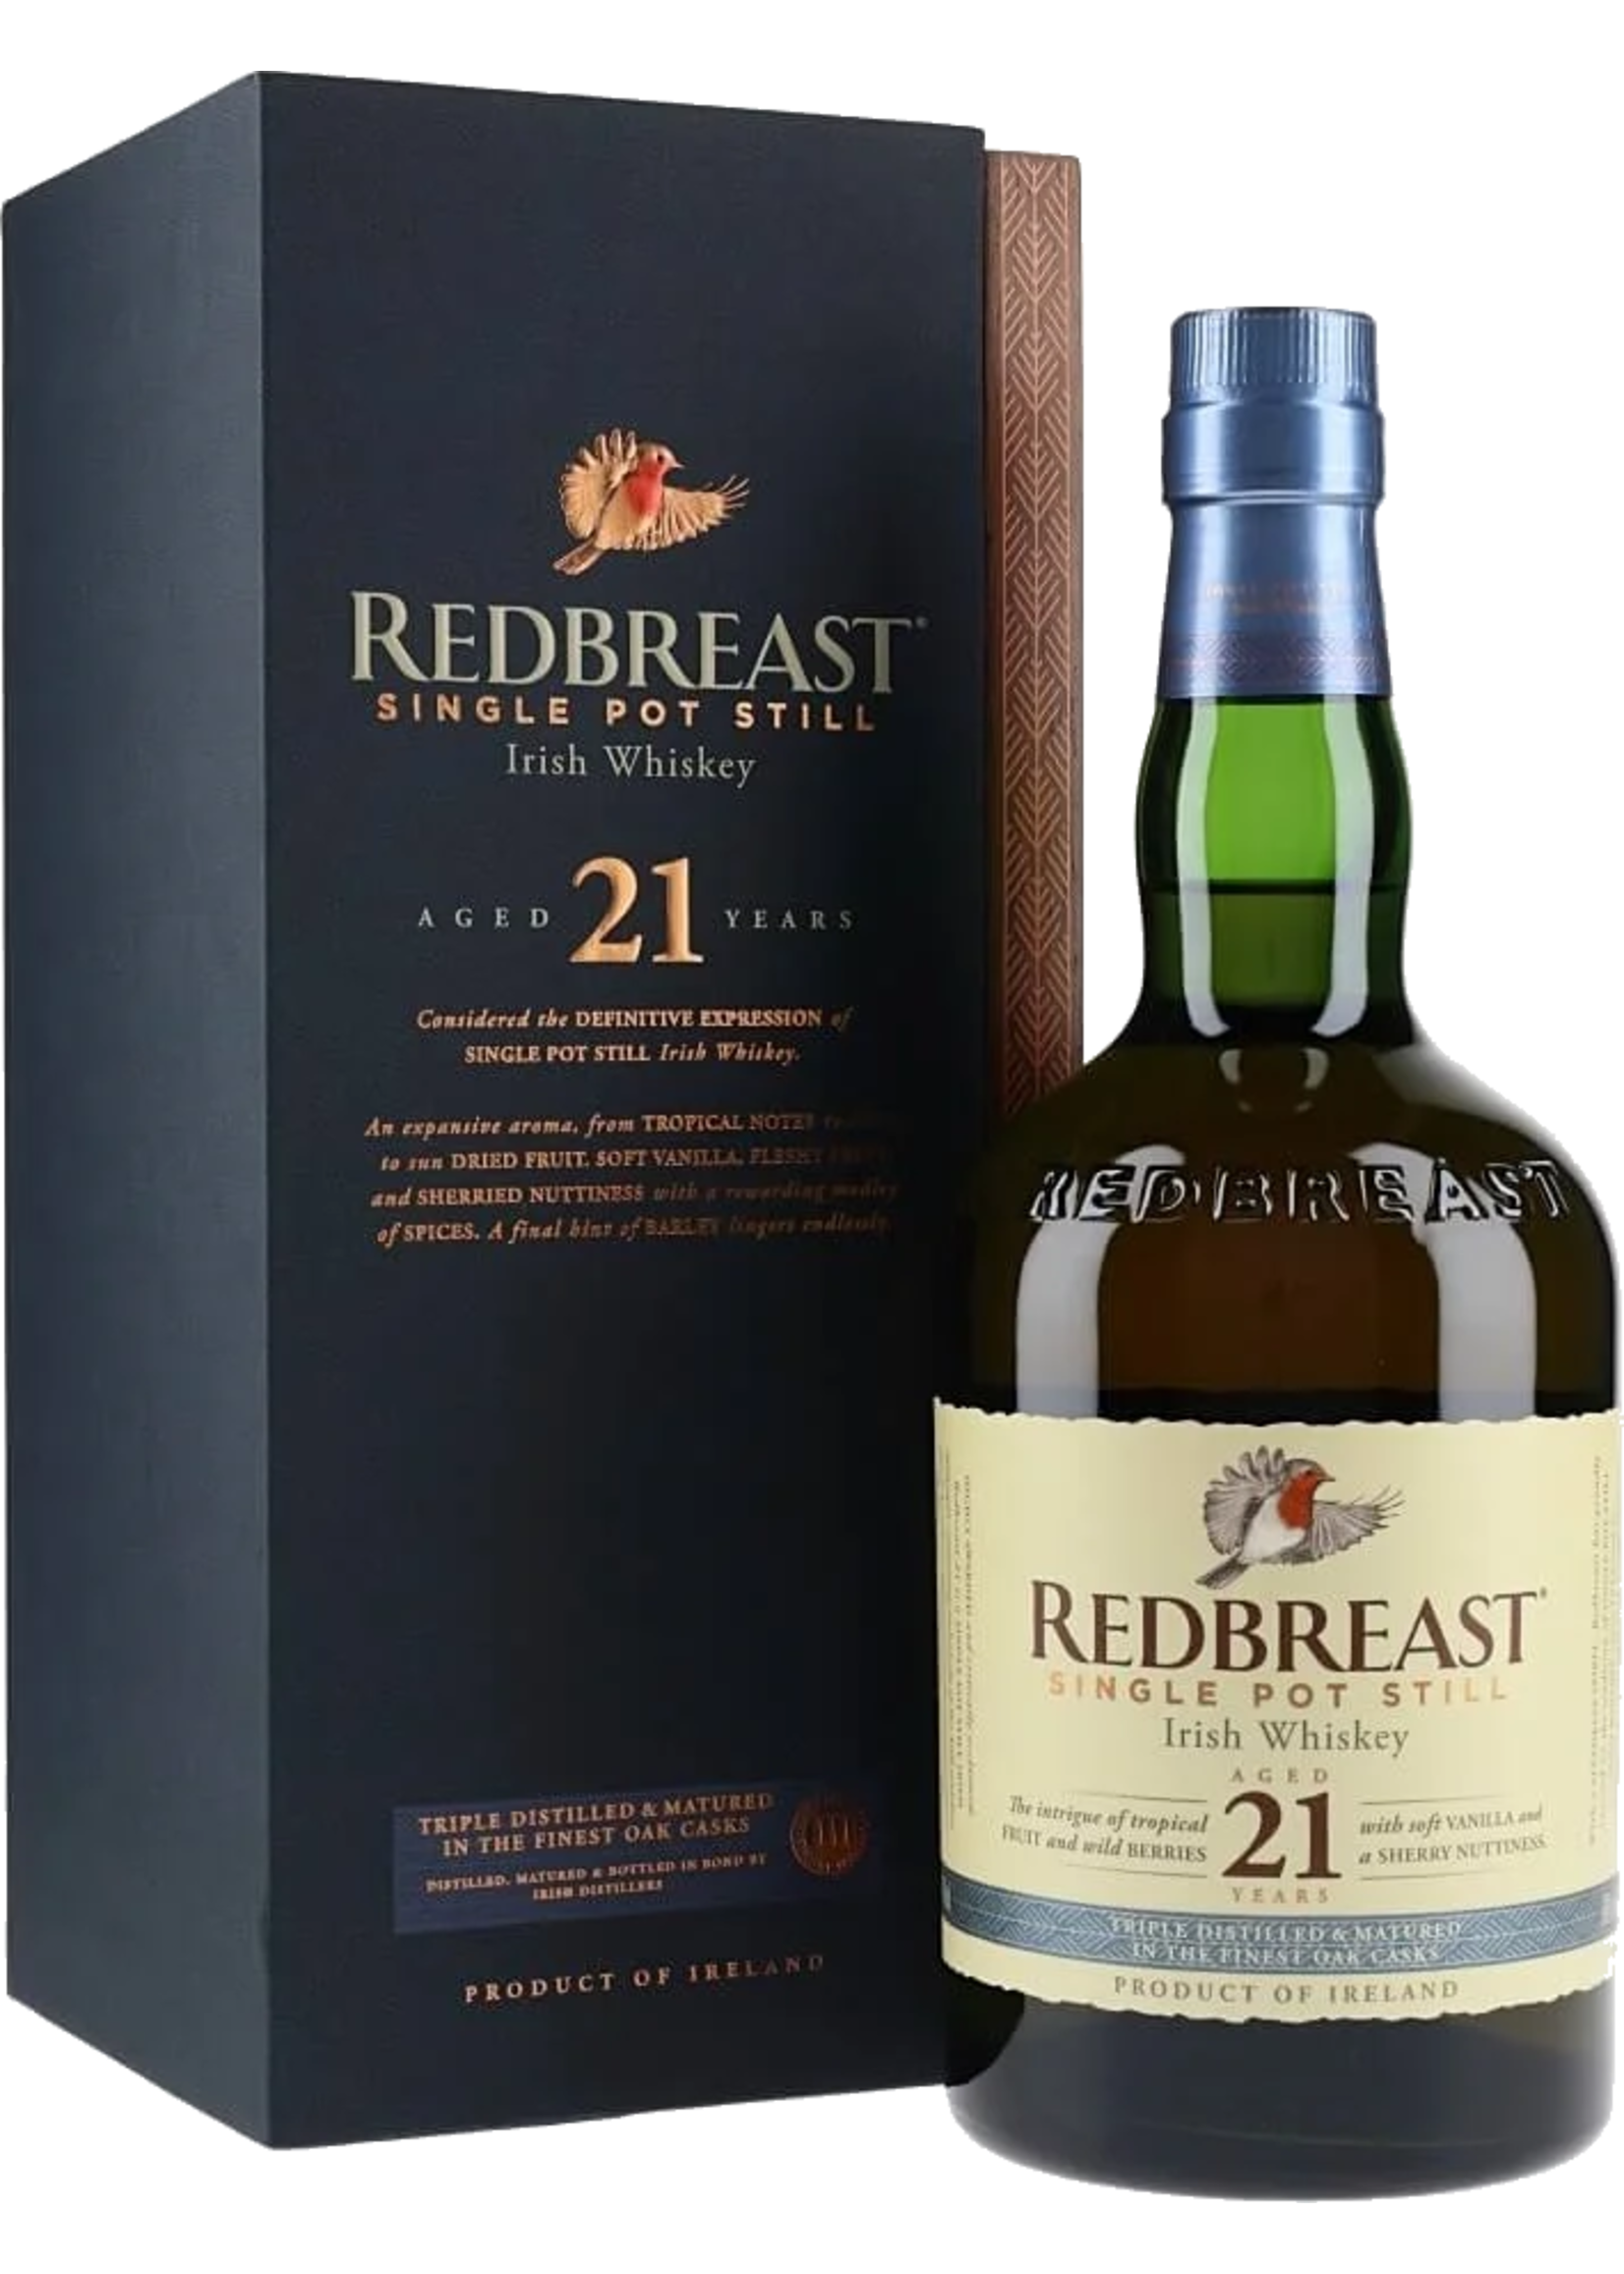 Redbreast Redbreast Whiskey / 21 Years Old Single Pot Still Irish Whiskey 46% abv / 750mL